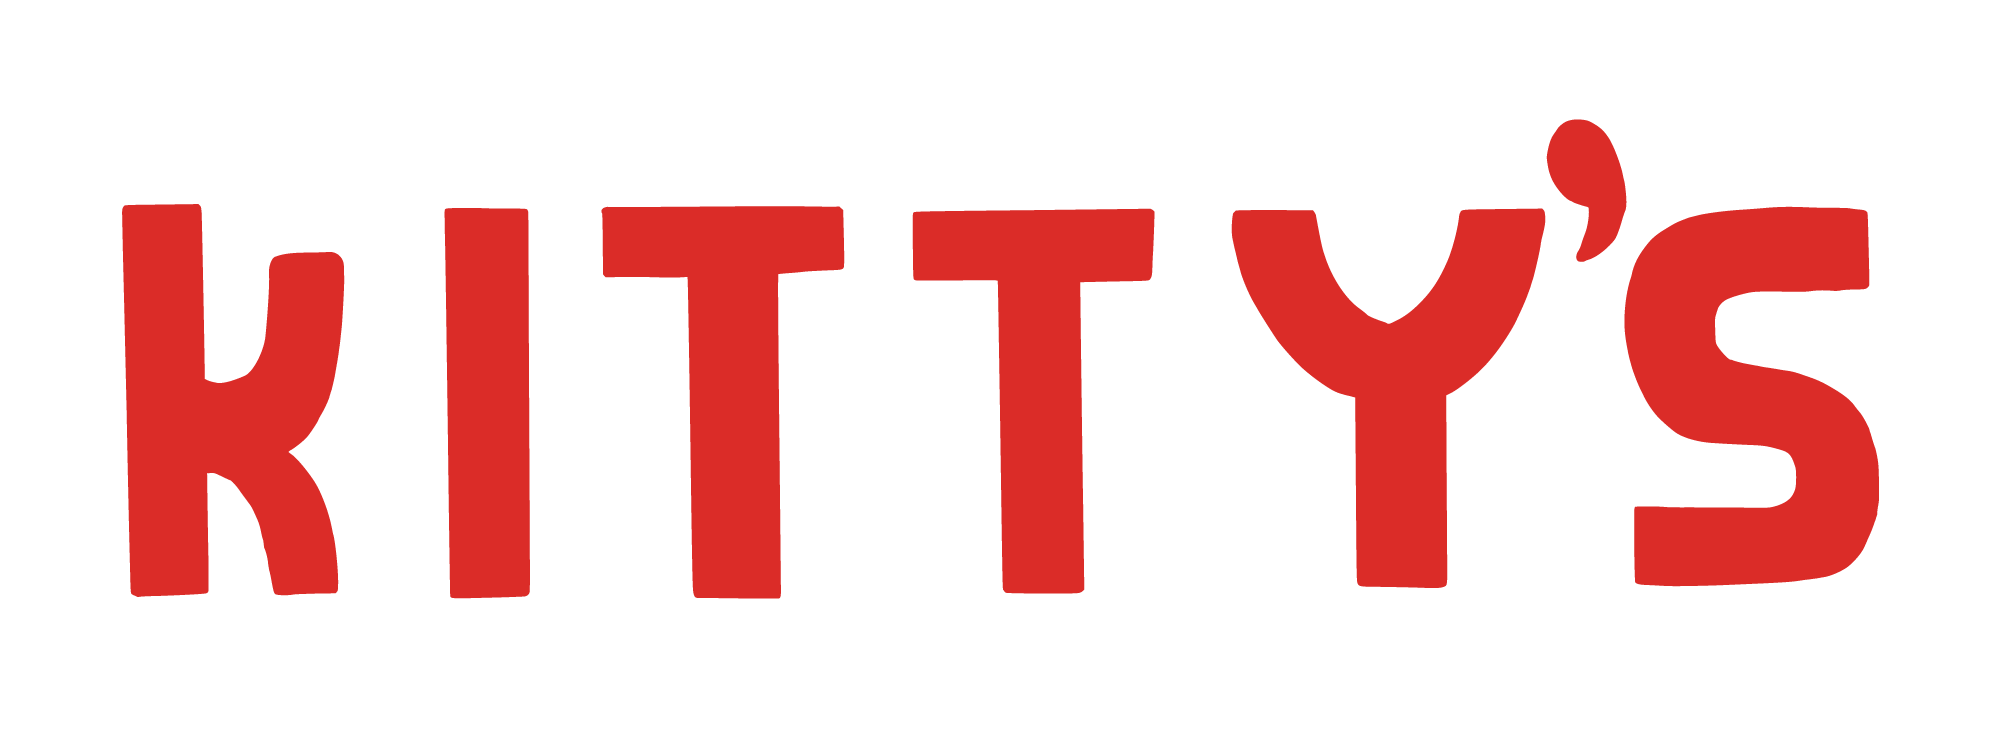 kittys_logo-06.png